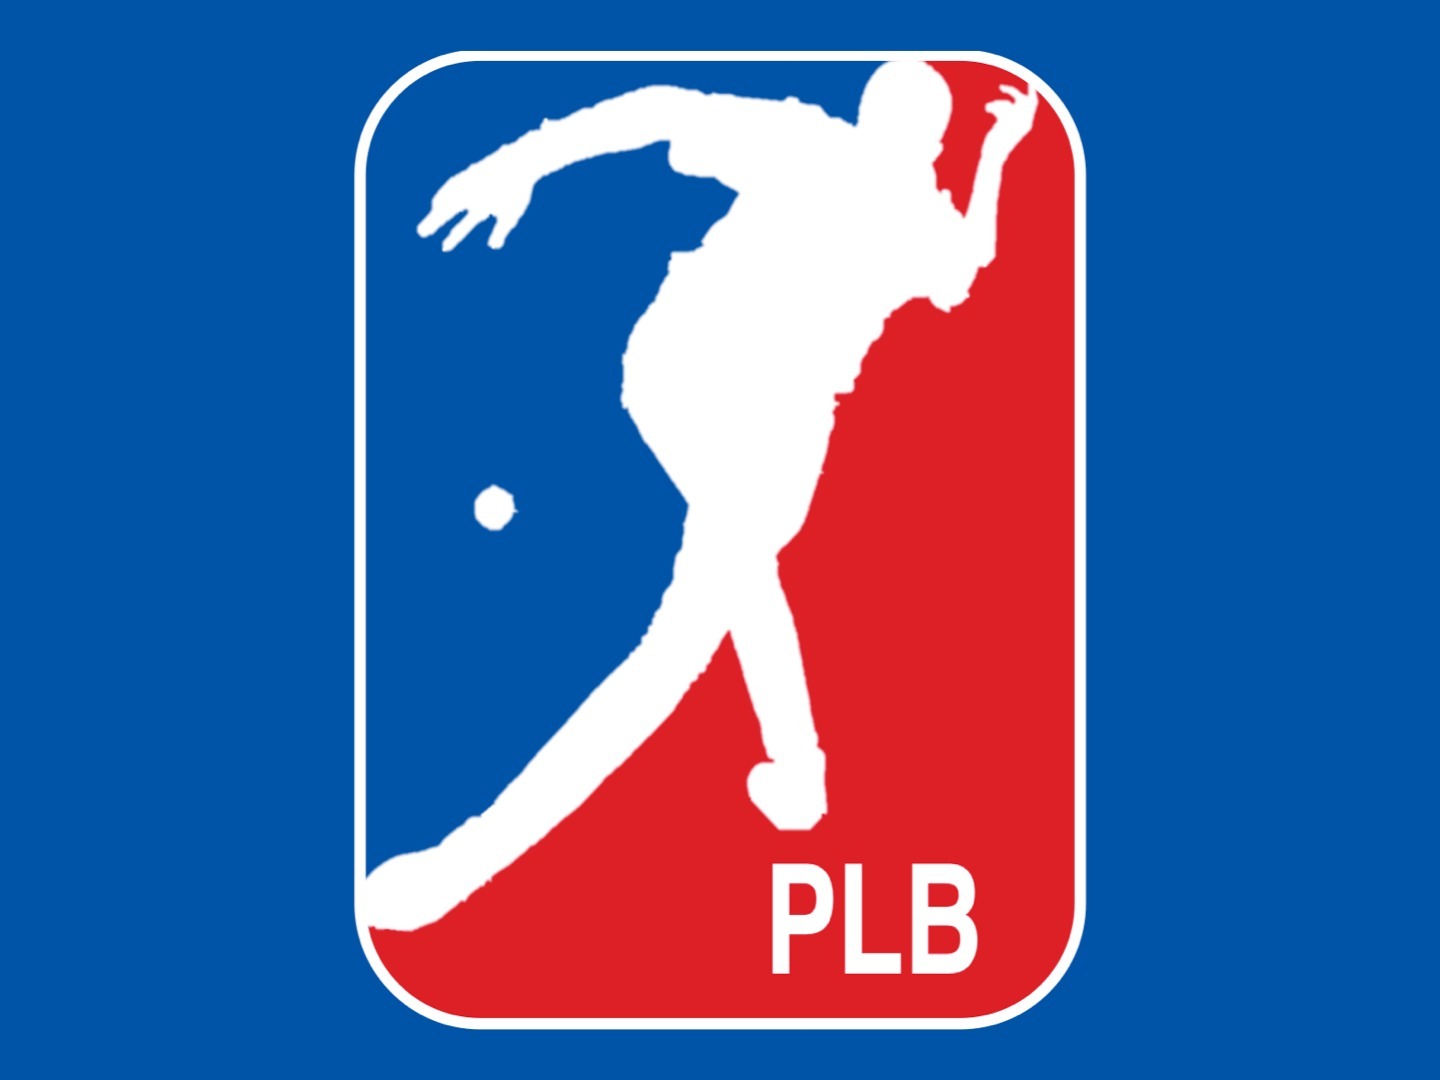 premier league bowling logo